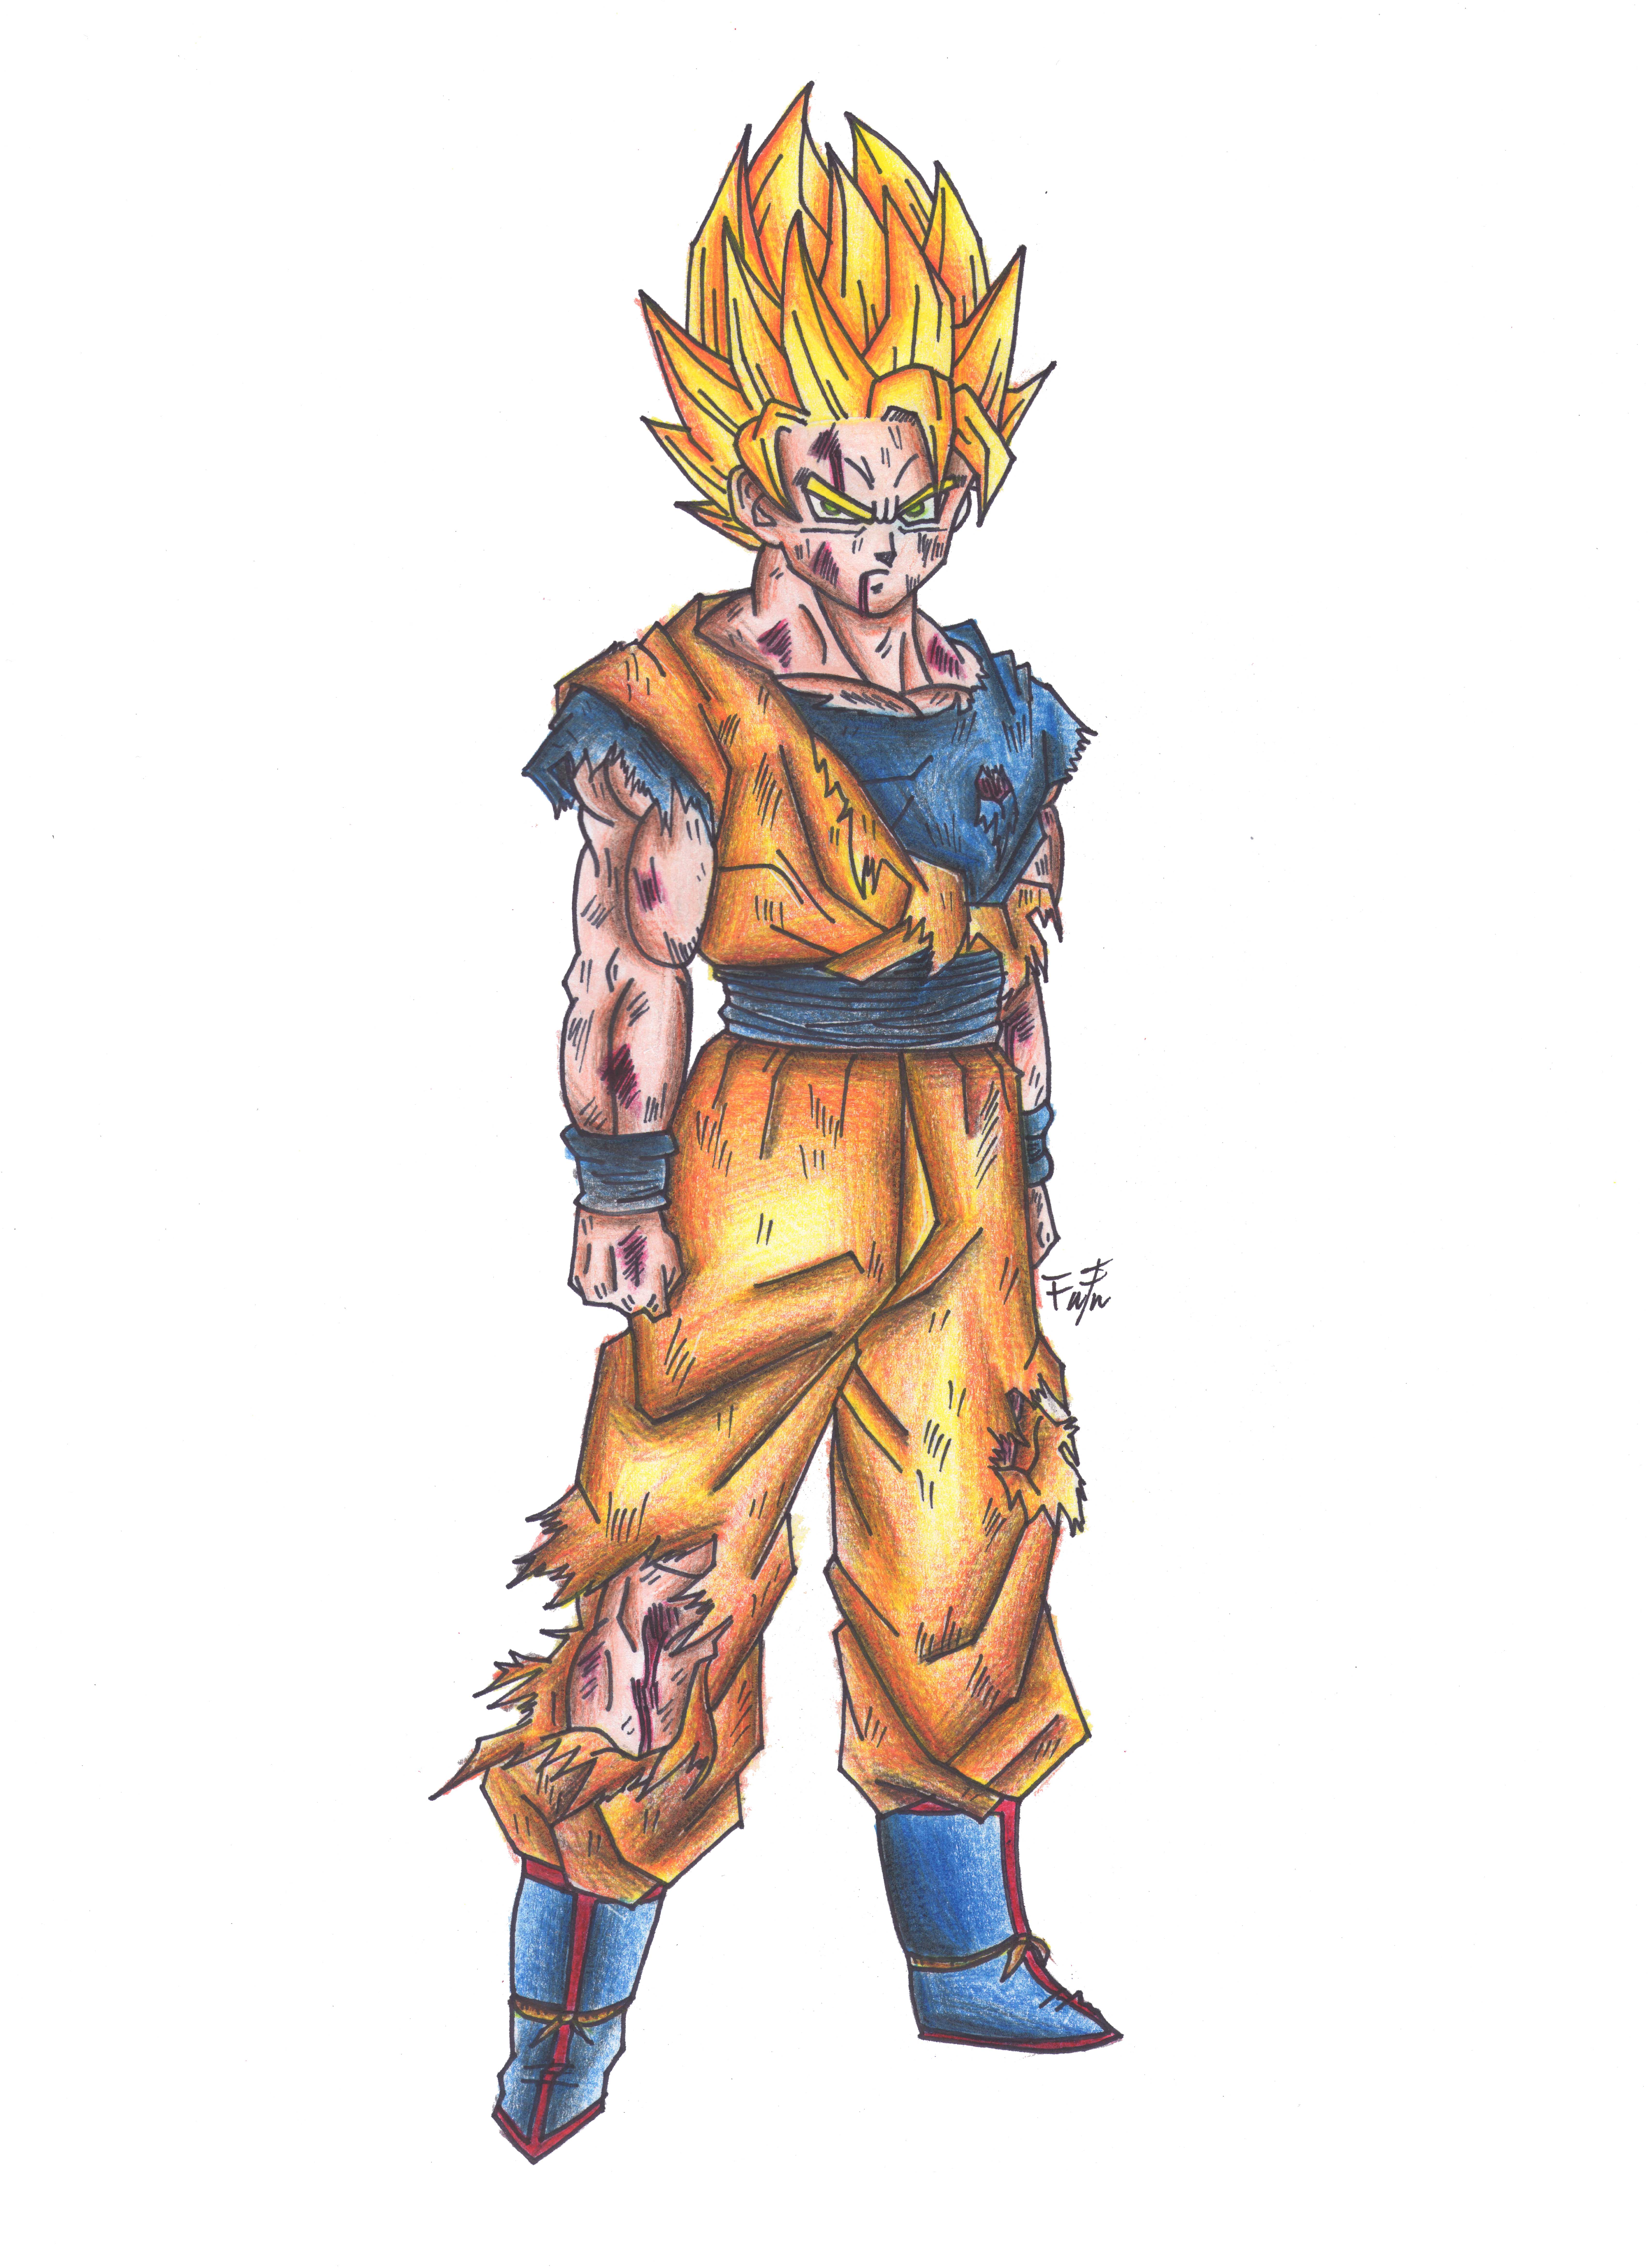 Goku Ssj2 Damaged Clothes By Cheygipe On DeviantArt.